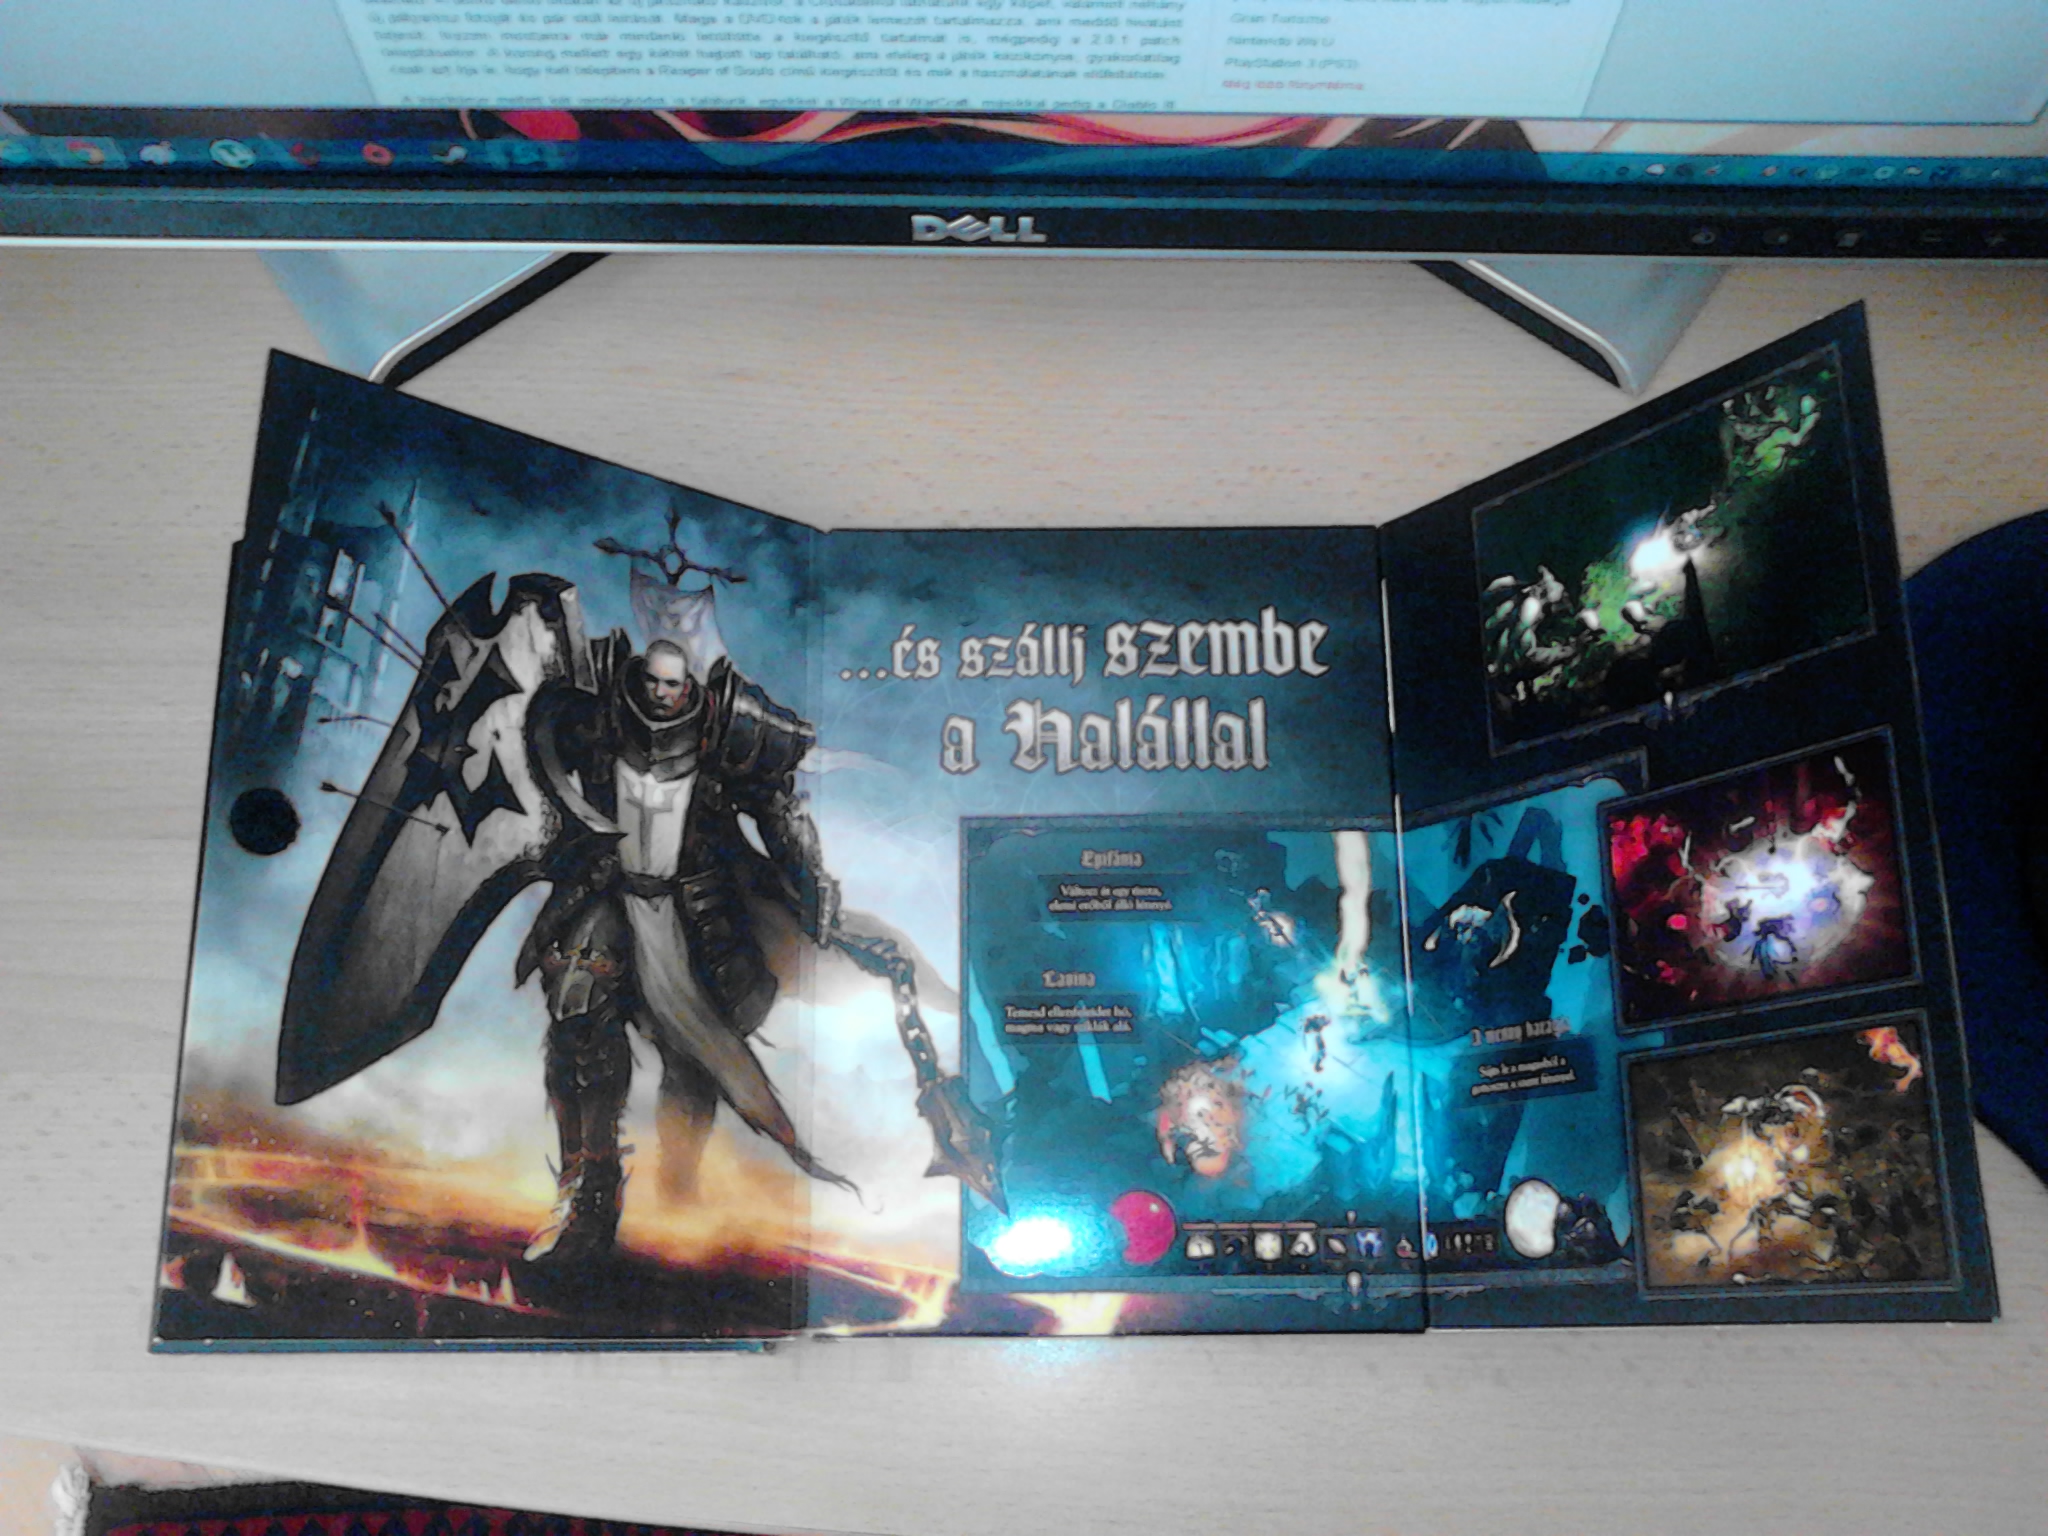 Diablo III: Reaper of Souls - Teszt - GAMEPOD.hu PC / PS4 / PS3 / Xbox One  / Xbox360 teszt